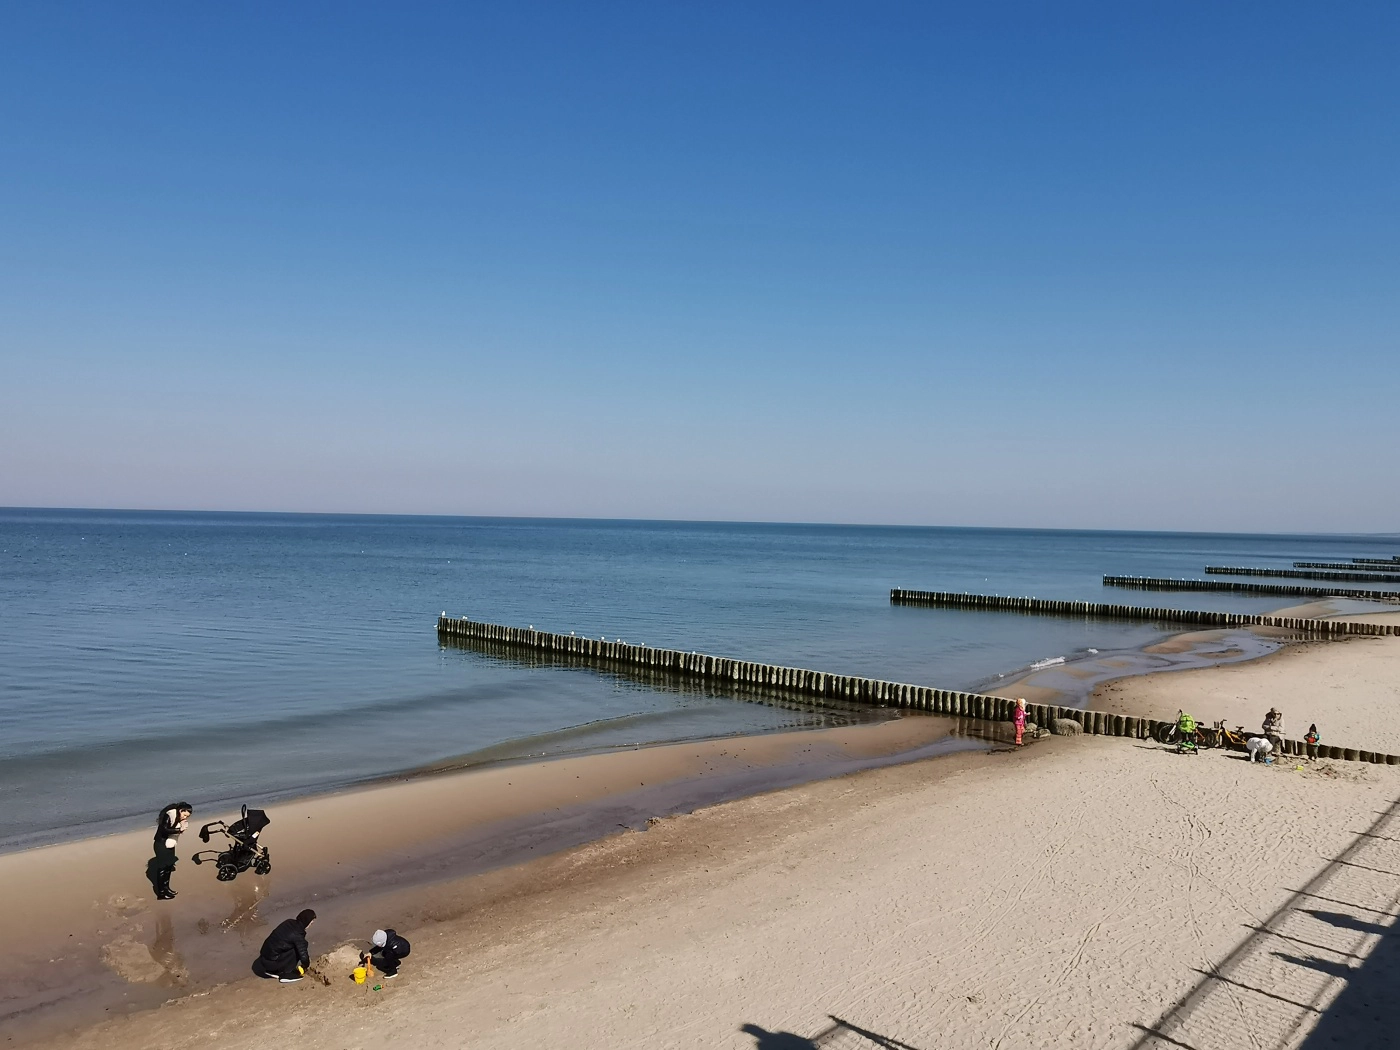  Zelenogradsk  strand - The Baltic coast of Russia